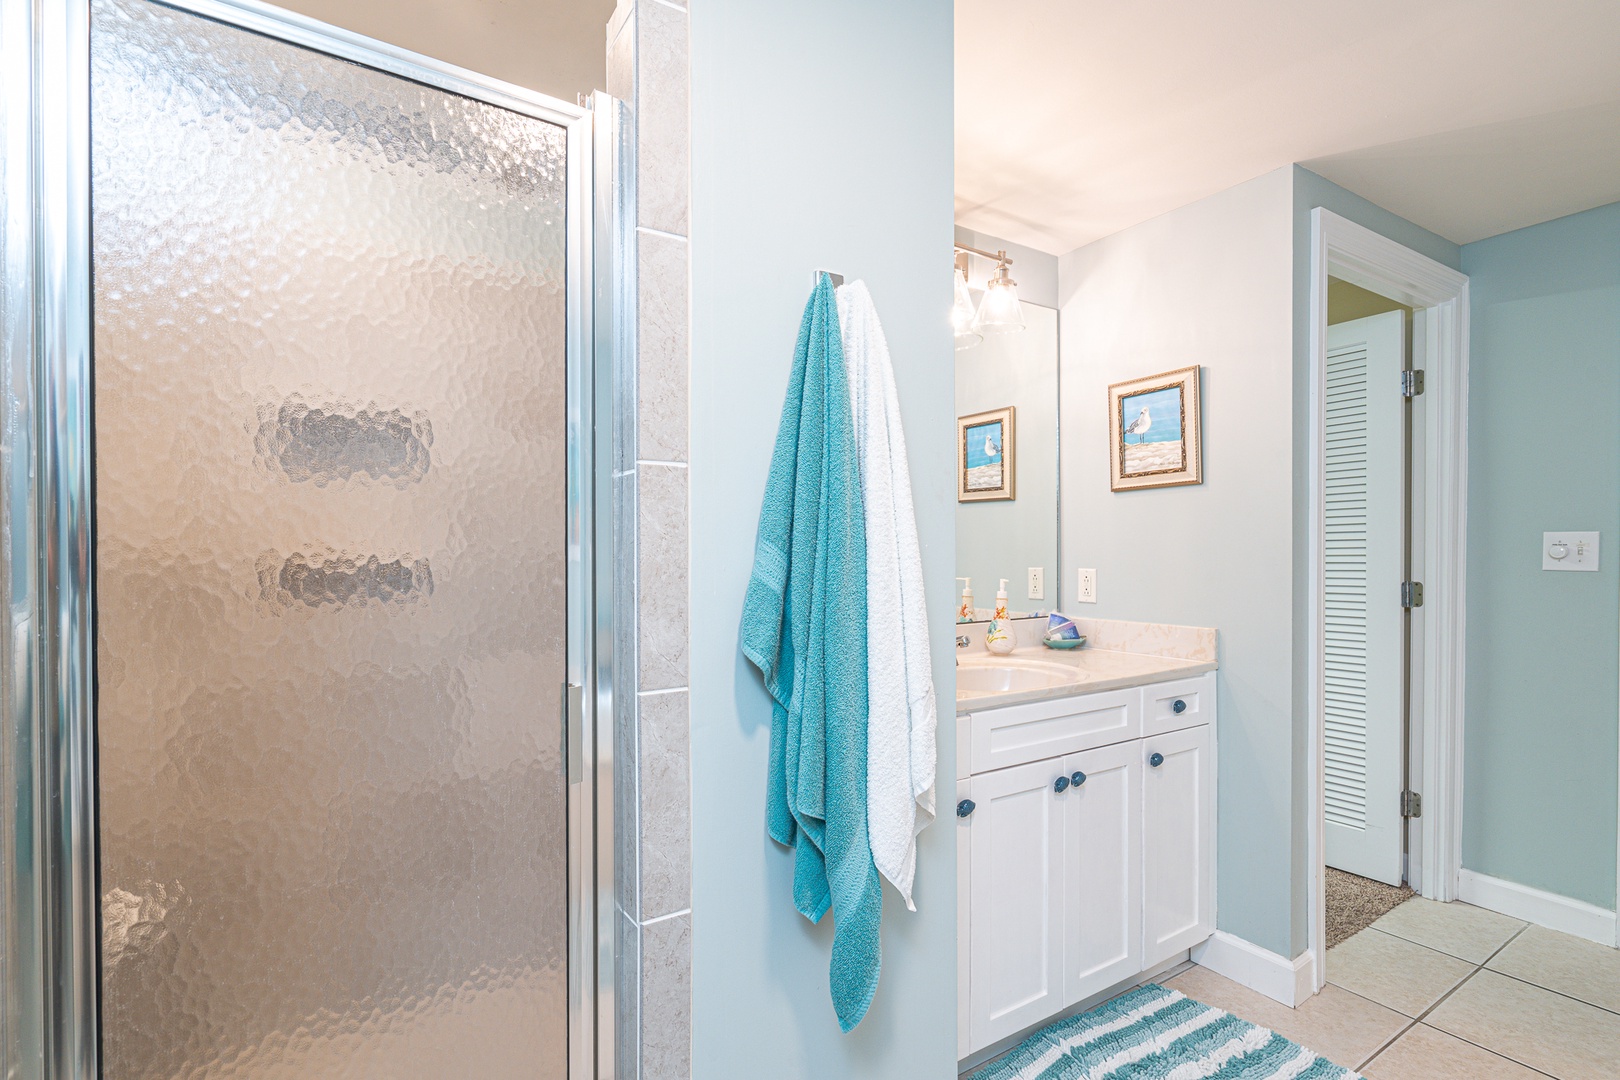 This ensuite bath features a single vanity, Jacuzzi tub, & glass shower